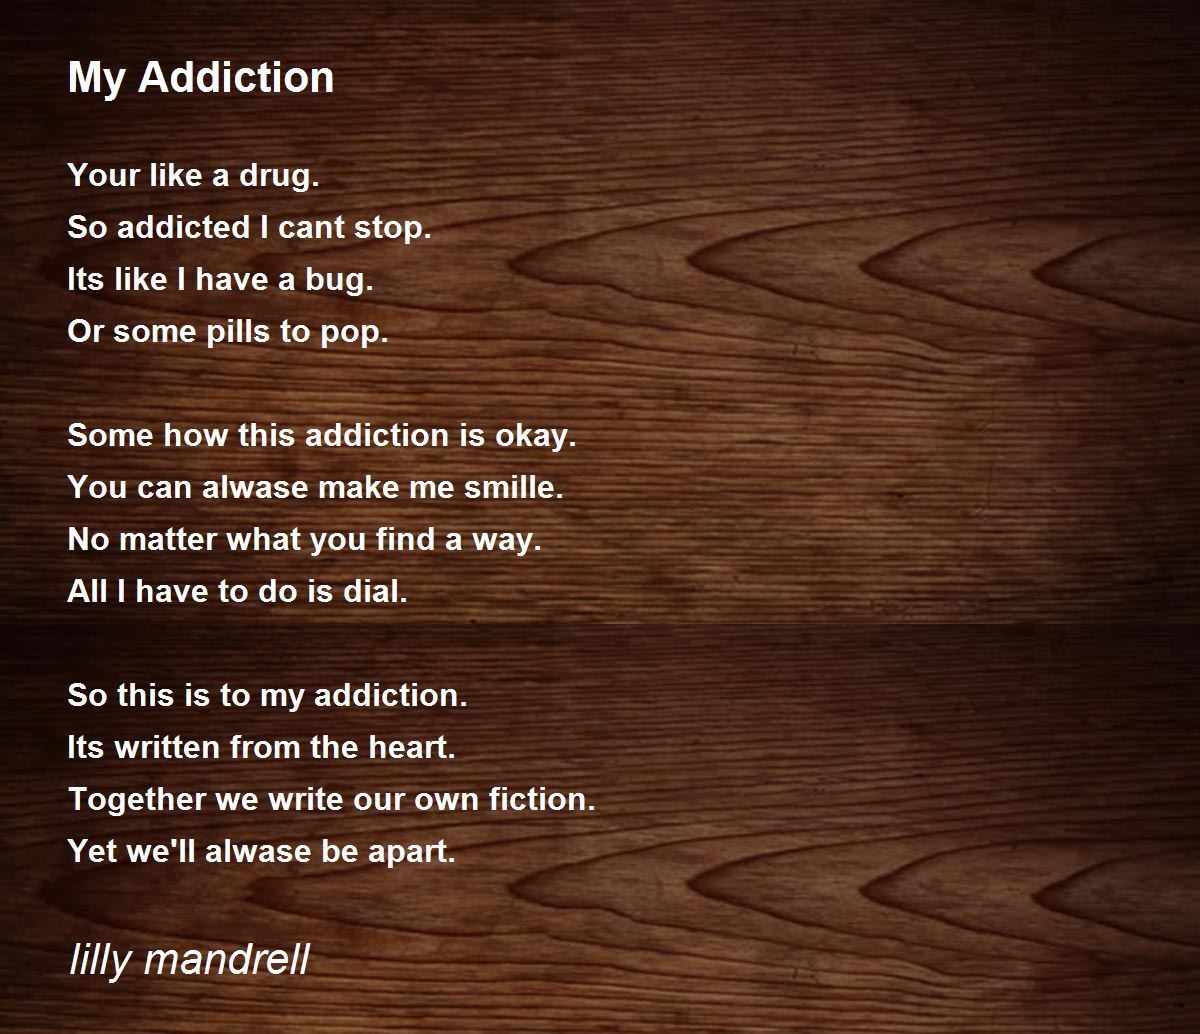 My Addiction Poem by lilly mandrell - Poem Hunter